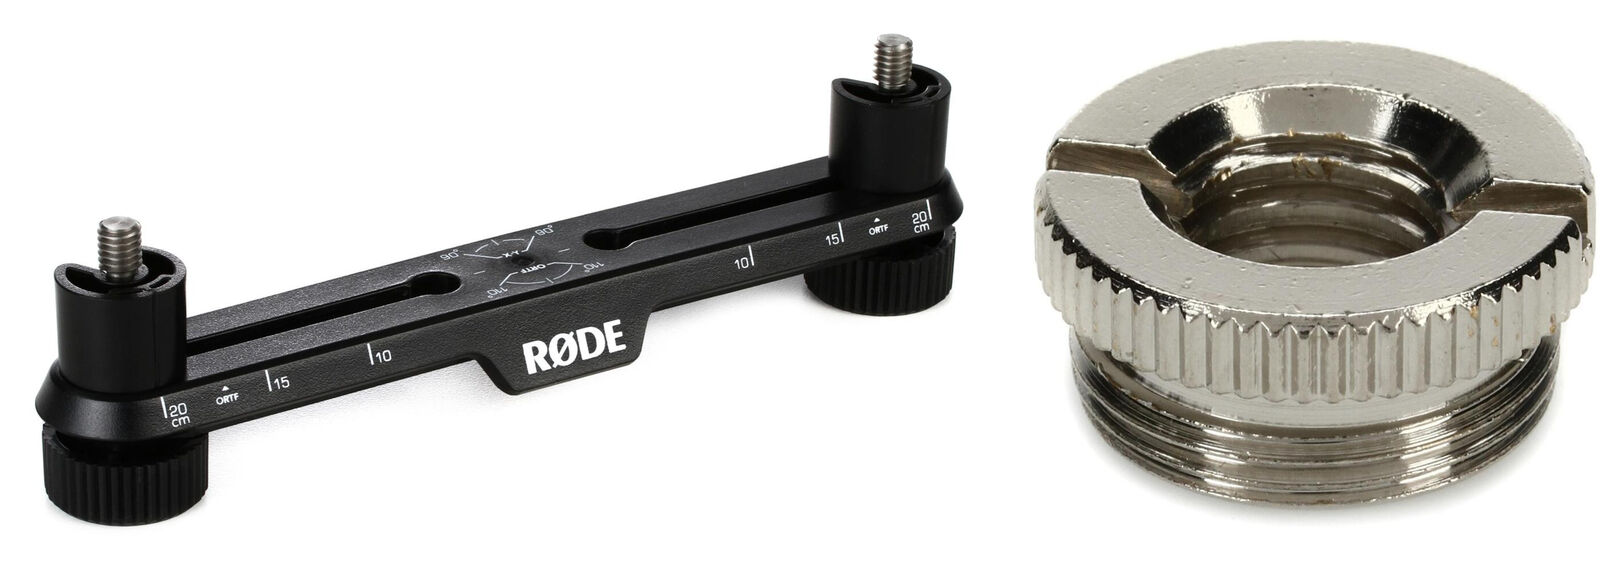 Rode Stereo Bar Microphone Mount + Hosa Mhd-3 Value Bundle